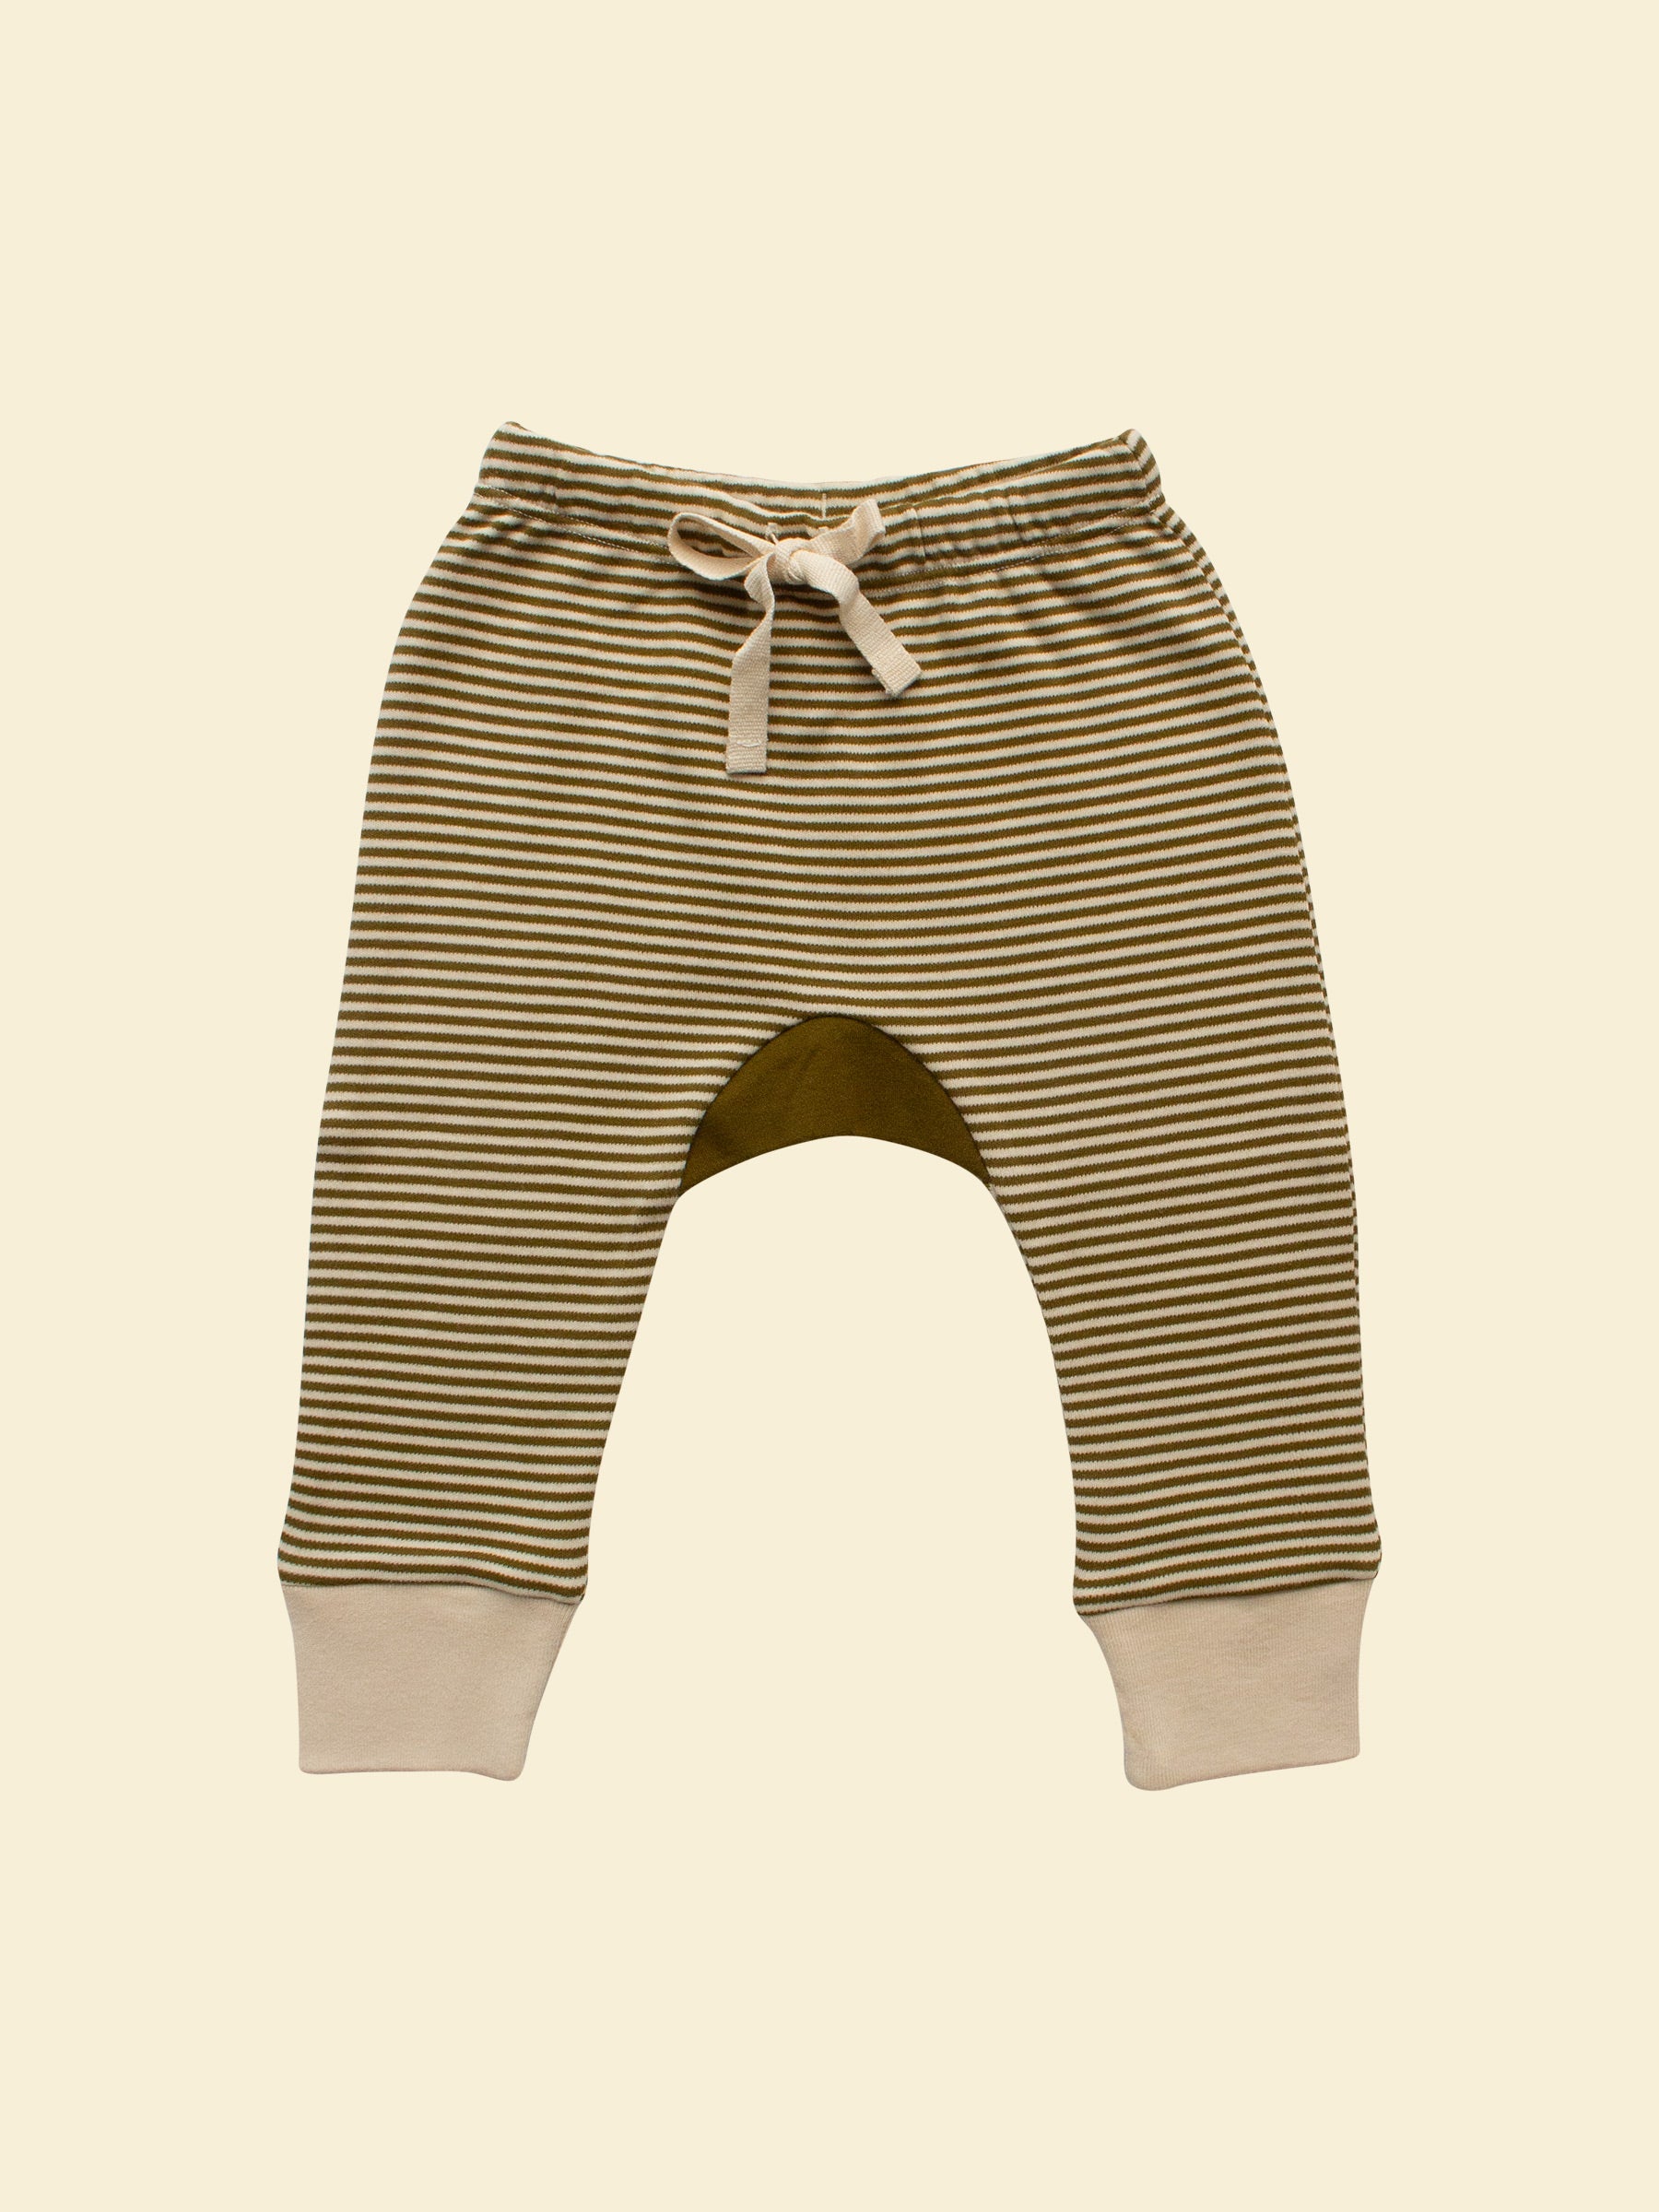 Organic Baby Pants - Olive Stripe